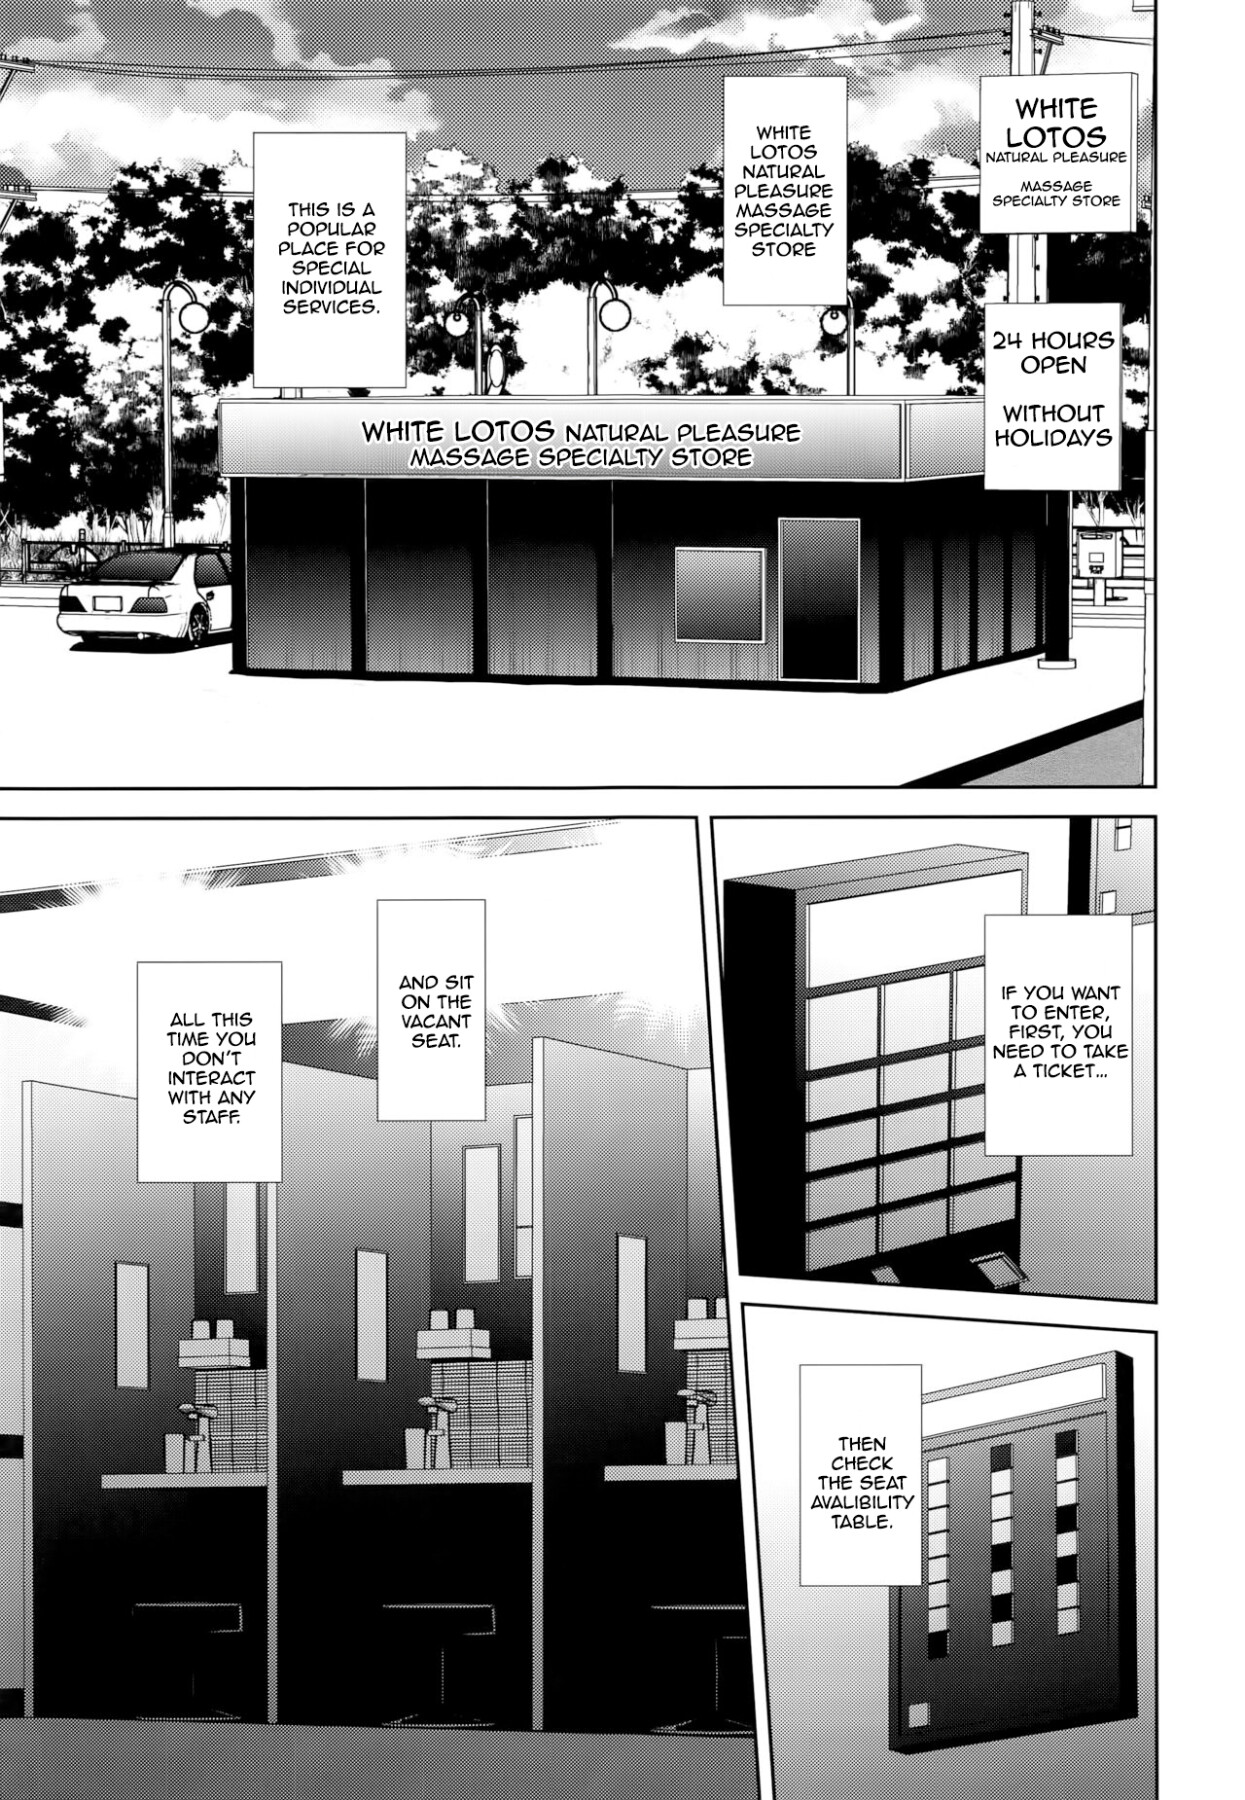 Hentai Manga Comic-White Lotos Natural Pleasure Massage Speciality Store-Read-2